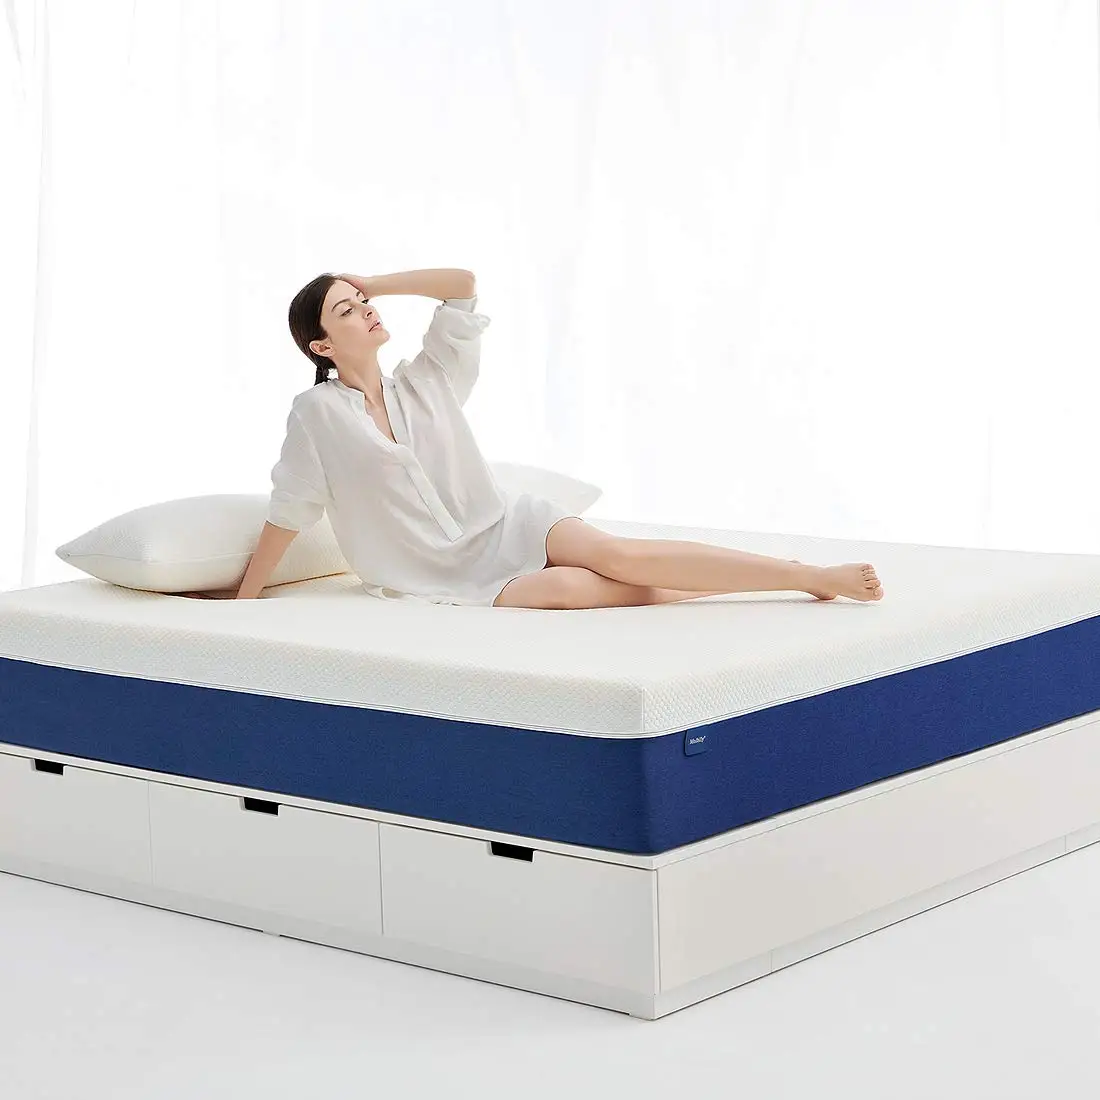 Bedroom star hotel comfort fire retardant cheap sleep well pocket spring mattress